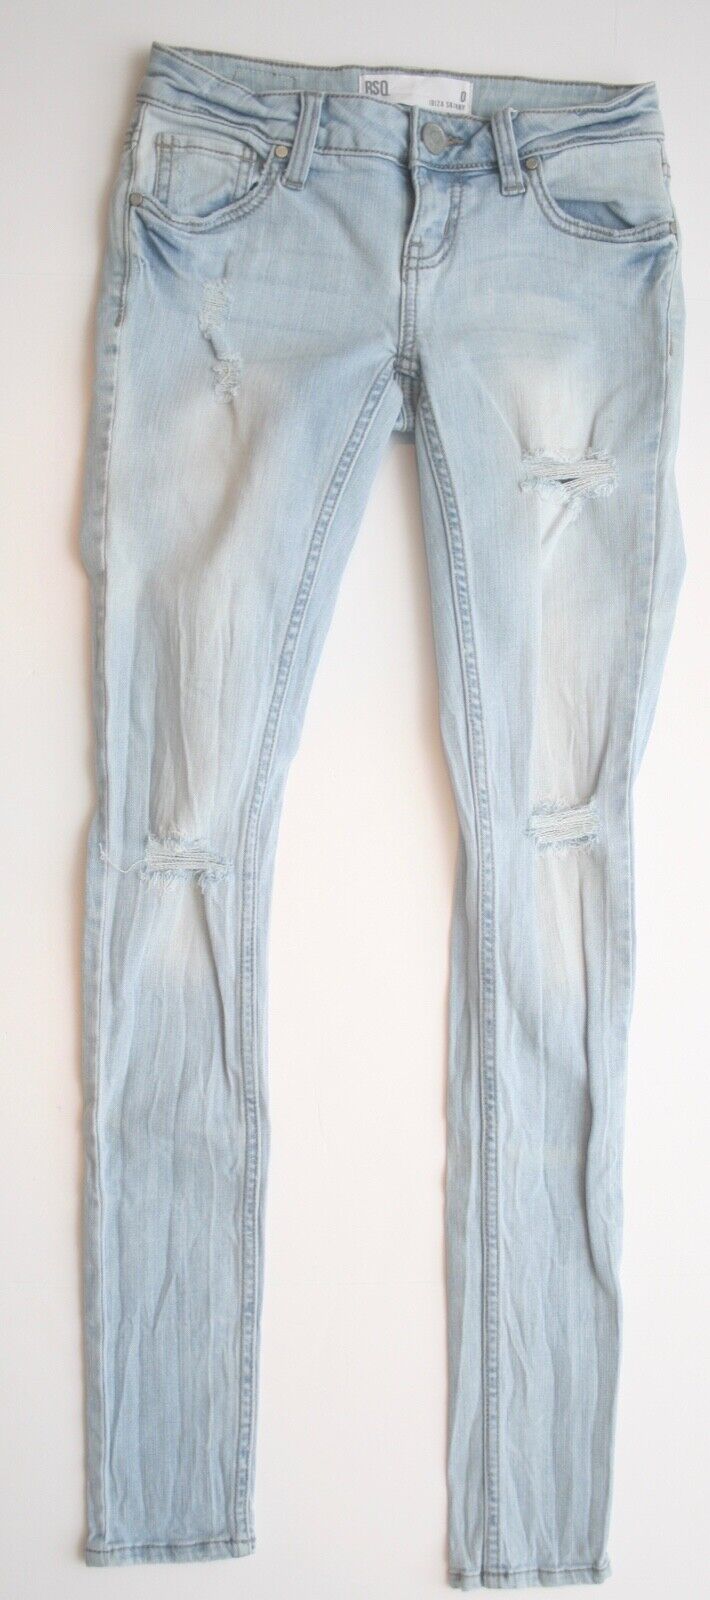 Juniors' RSQ Jeans Ibiza Skinny Size 0 Light Wash - image 2